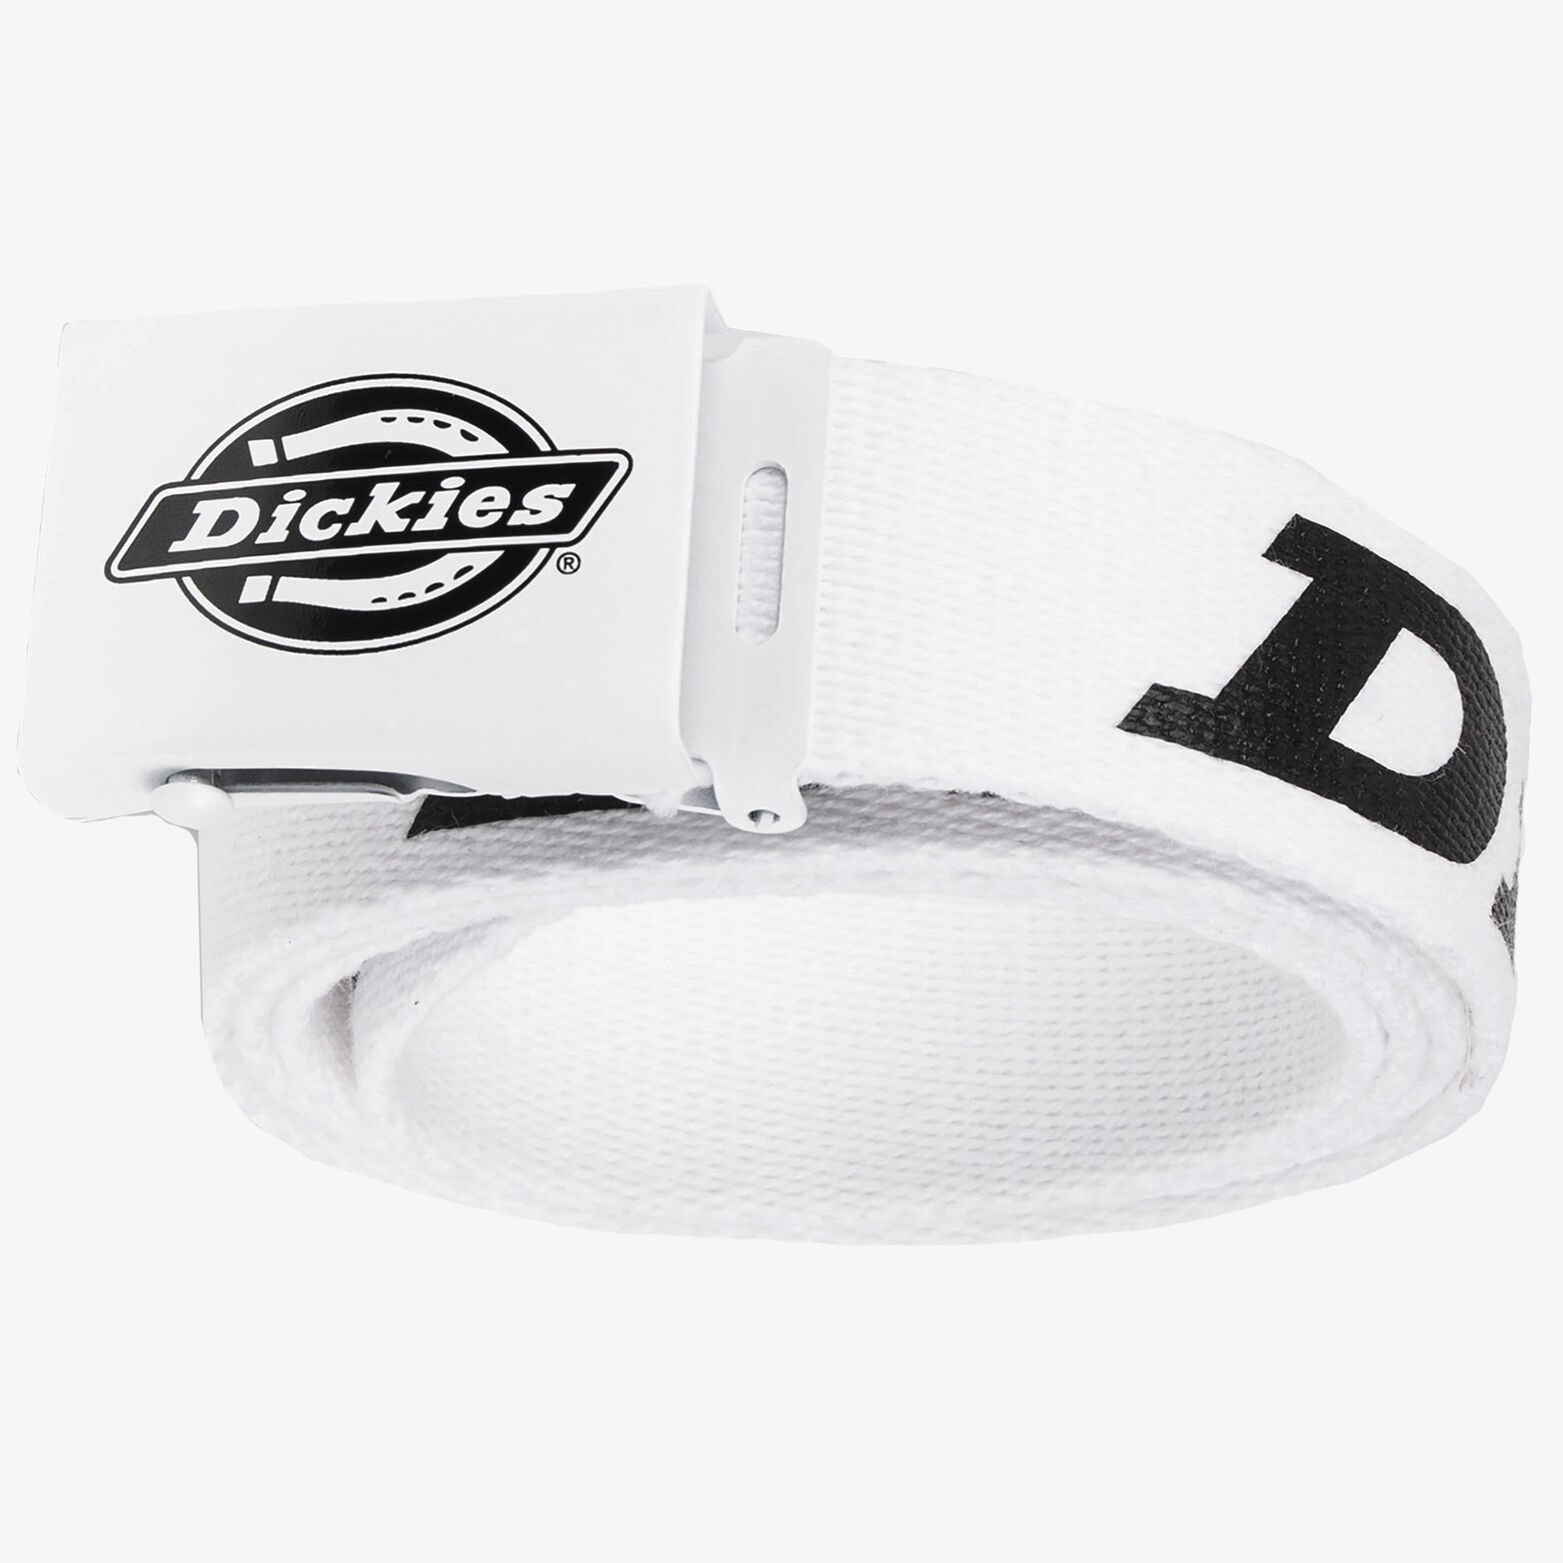 Dickies Men/'s Belt with Logo Stamp